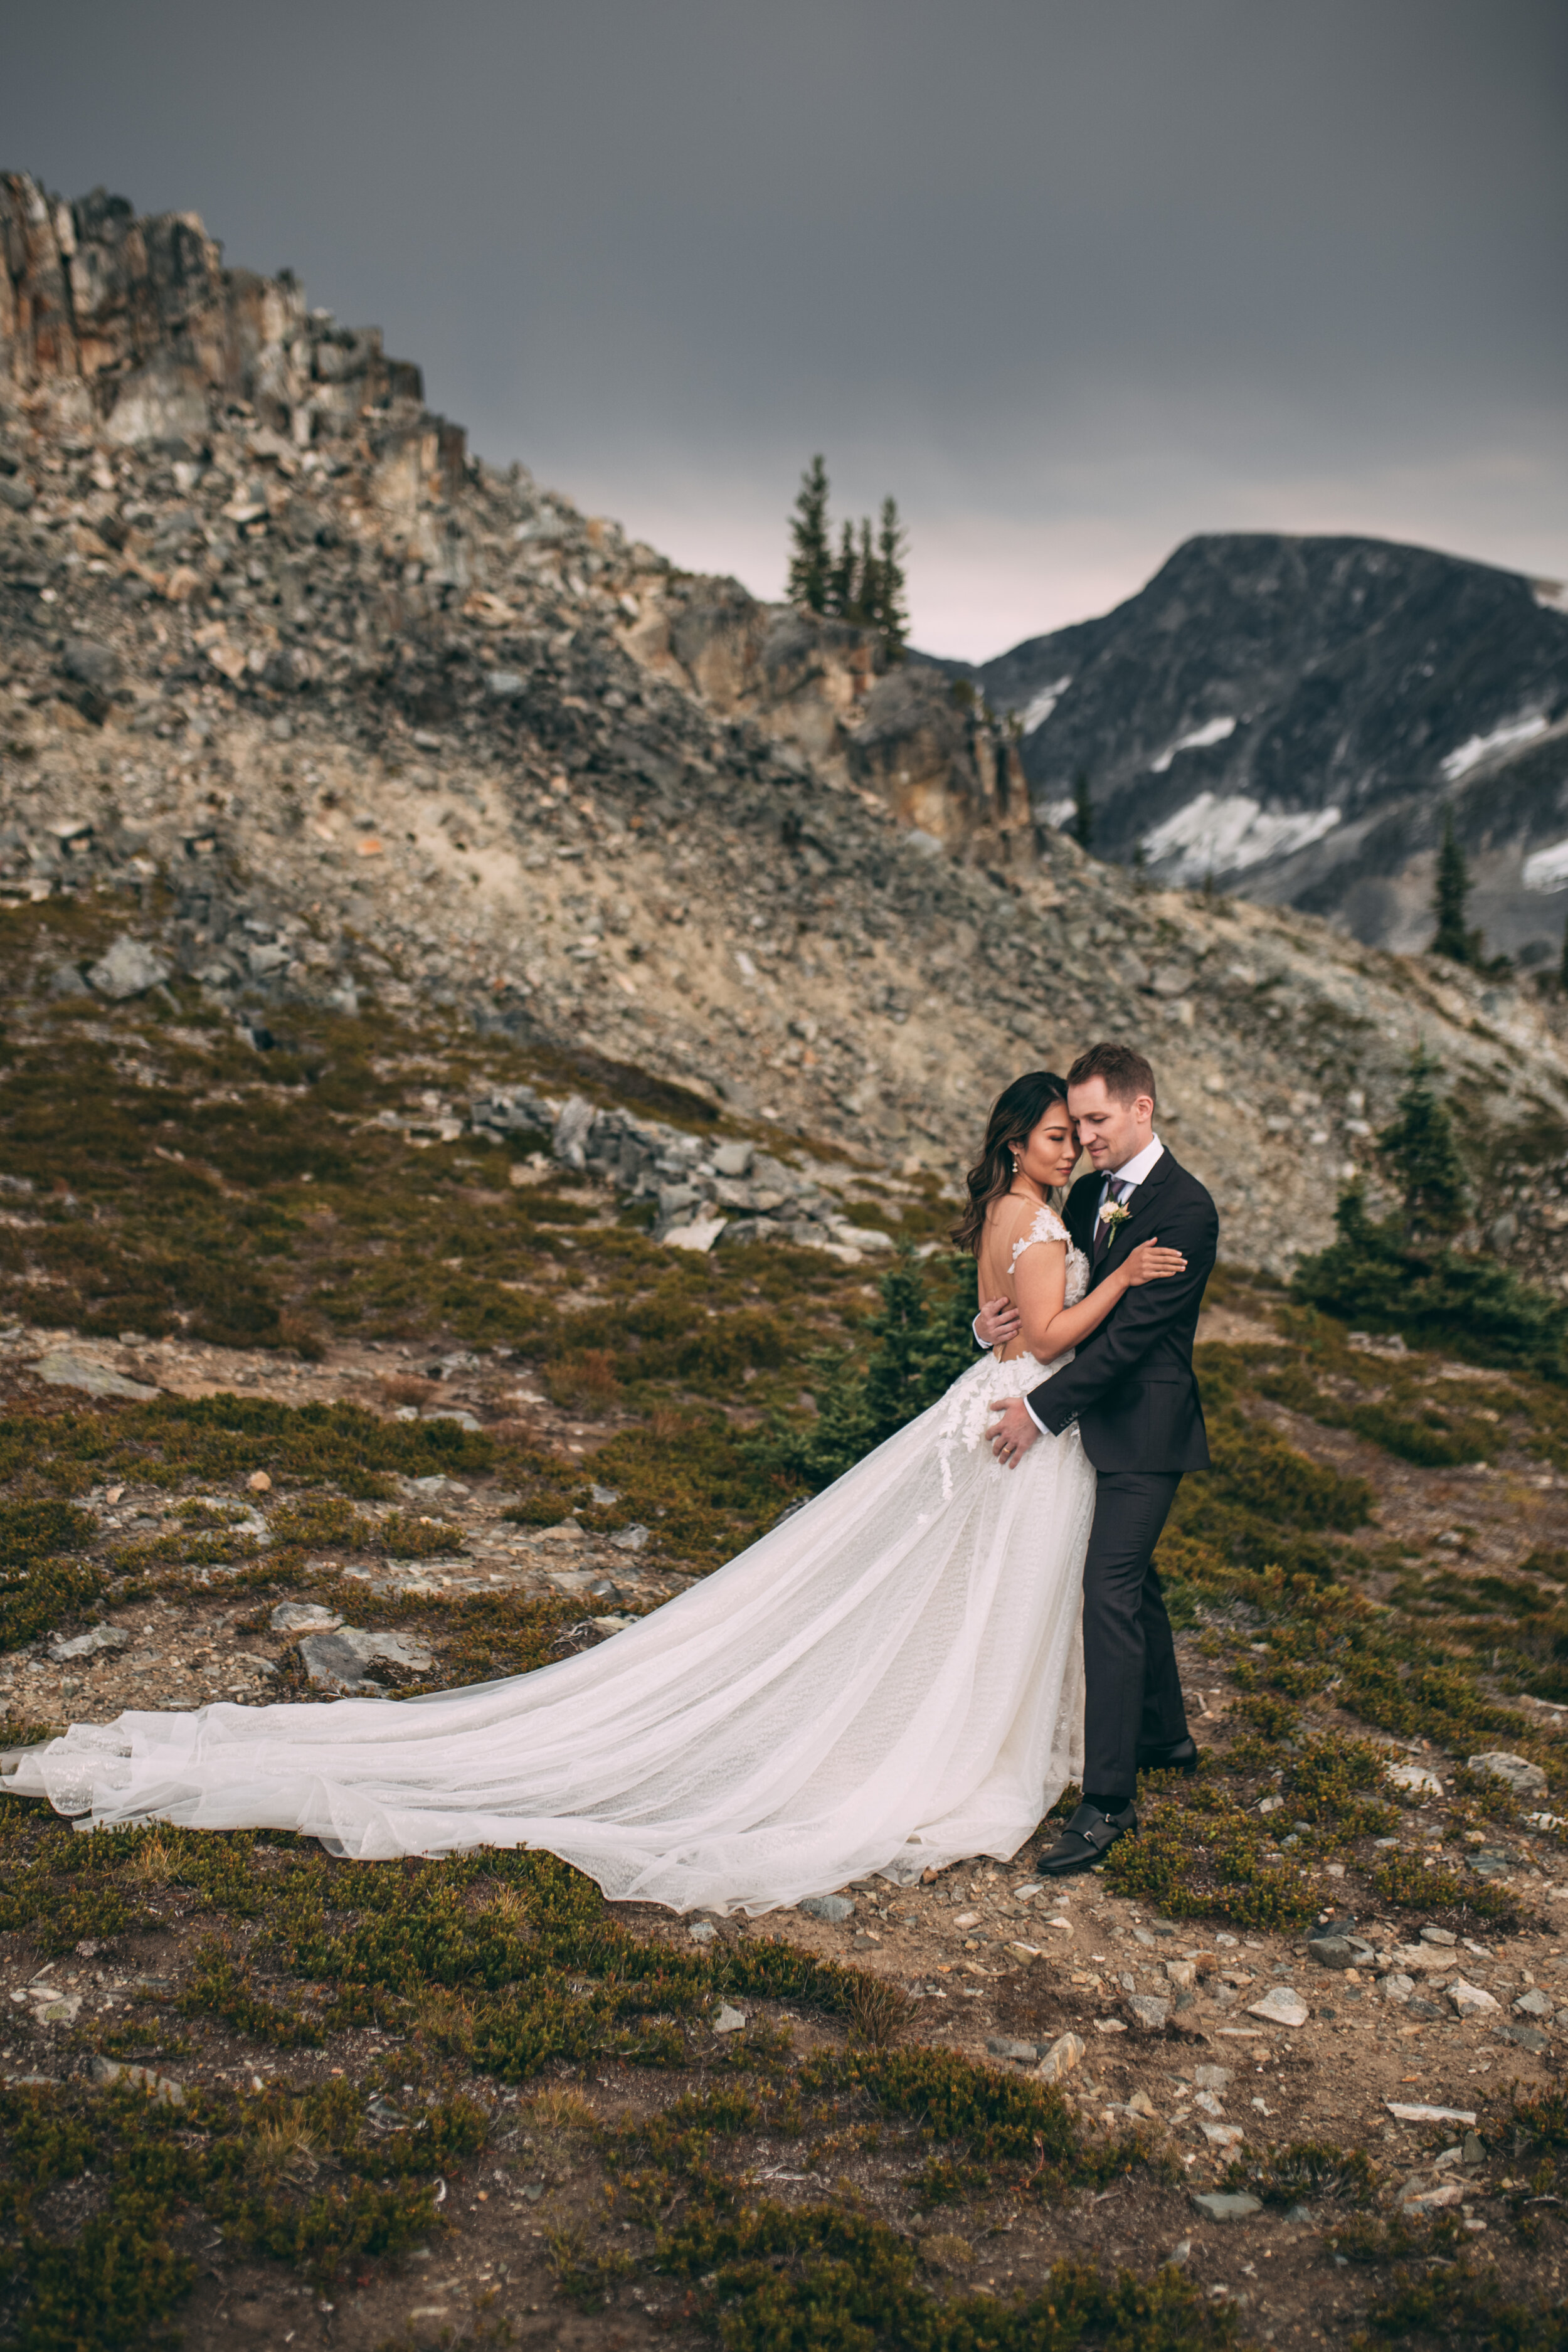 Katherine & Jamie Sneak Peeks - Mountain Top Elopement - Whistler BC - Laura Olson Photography--5.jpg